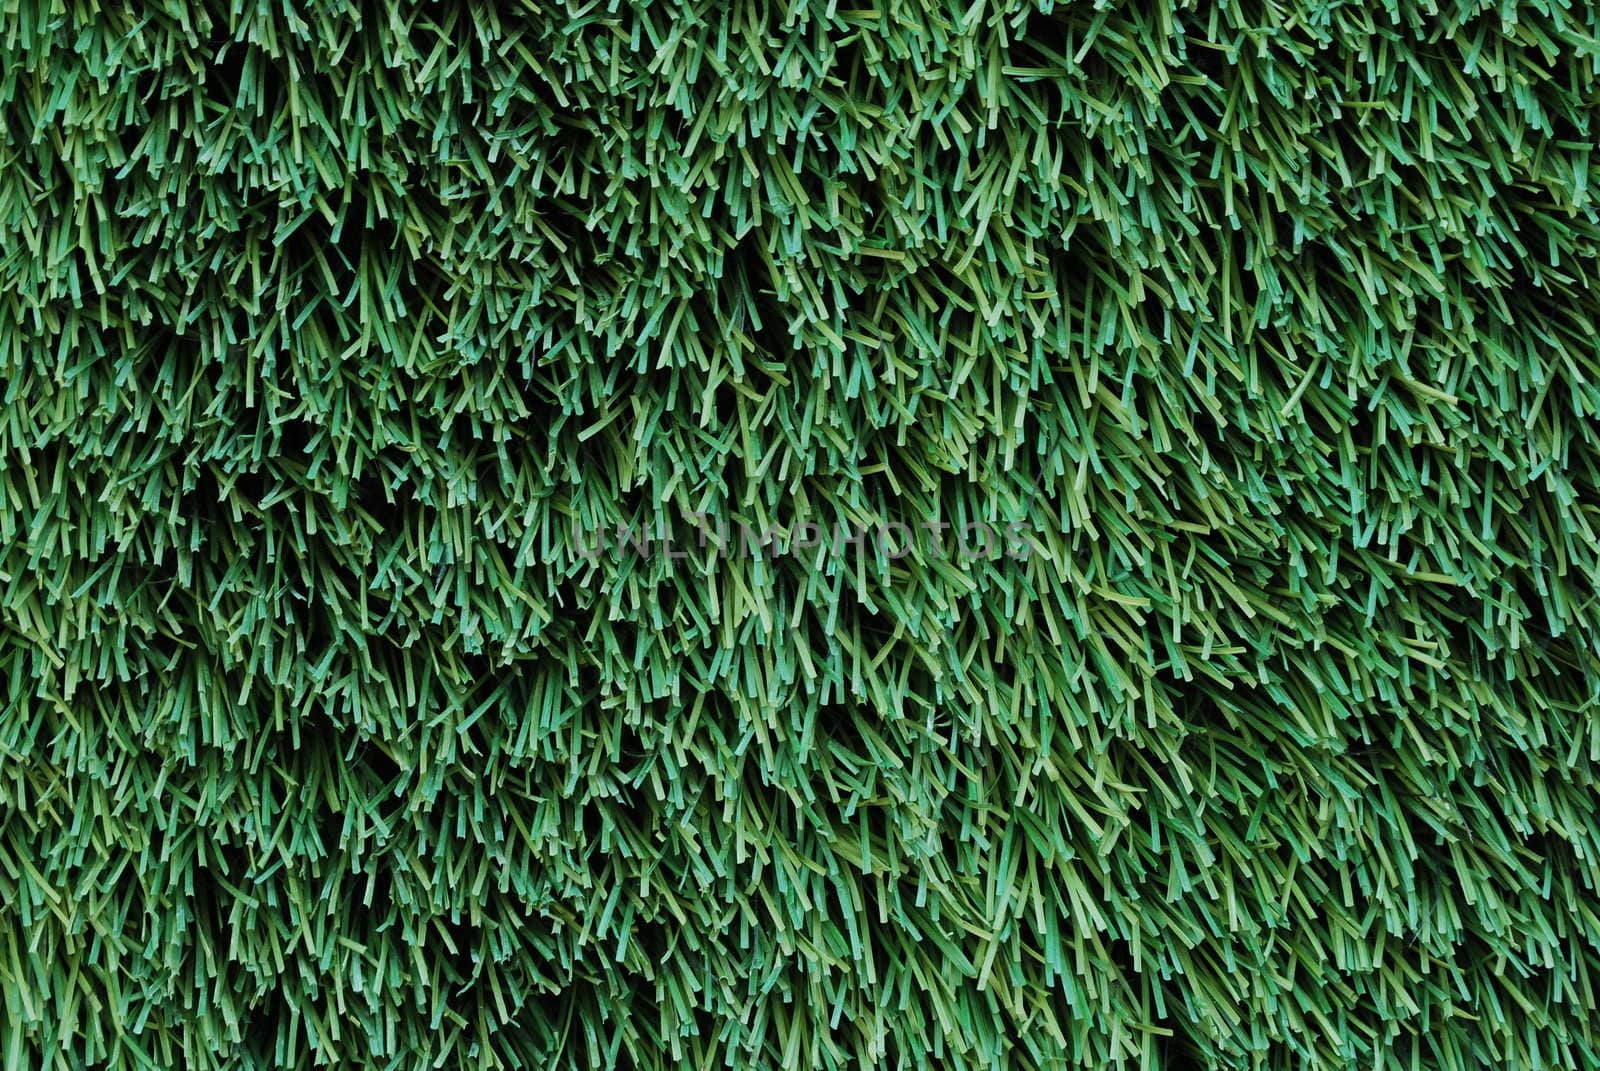 Green Turf Background by luissantos84